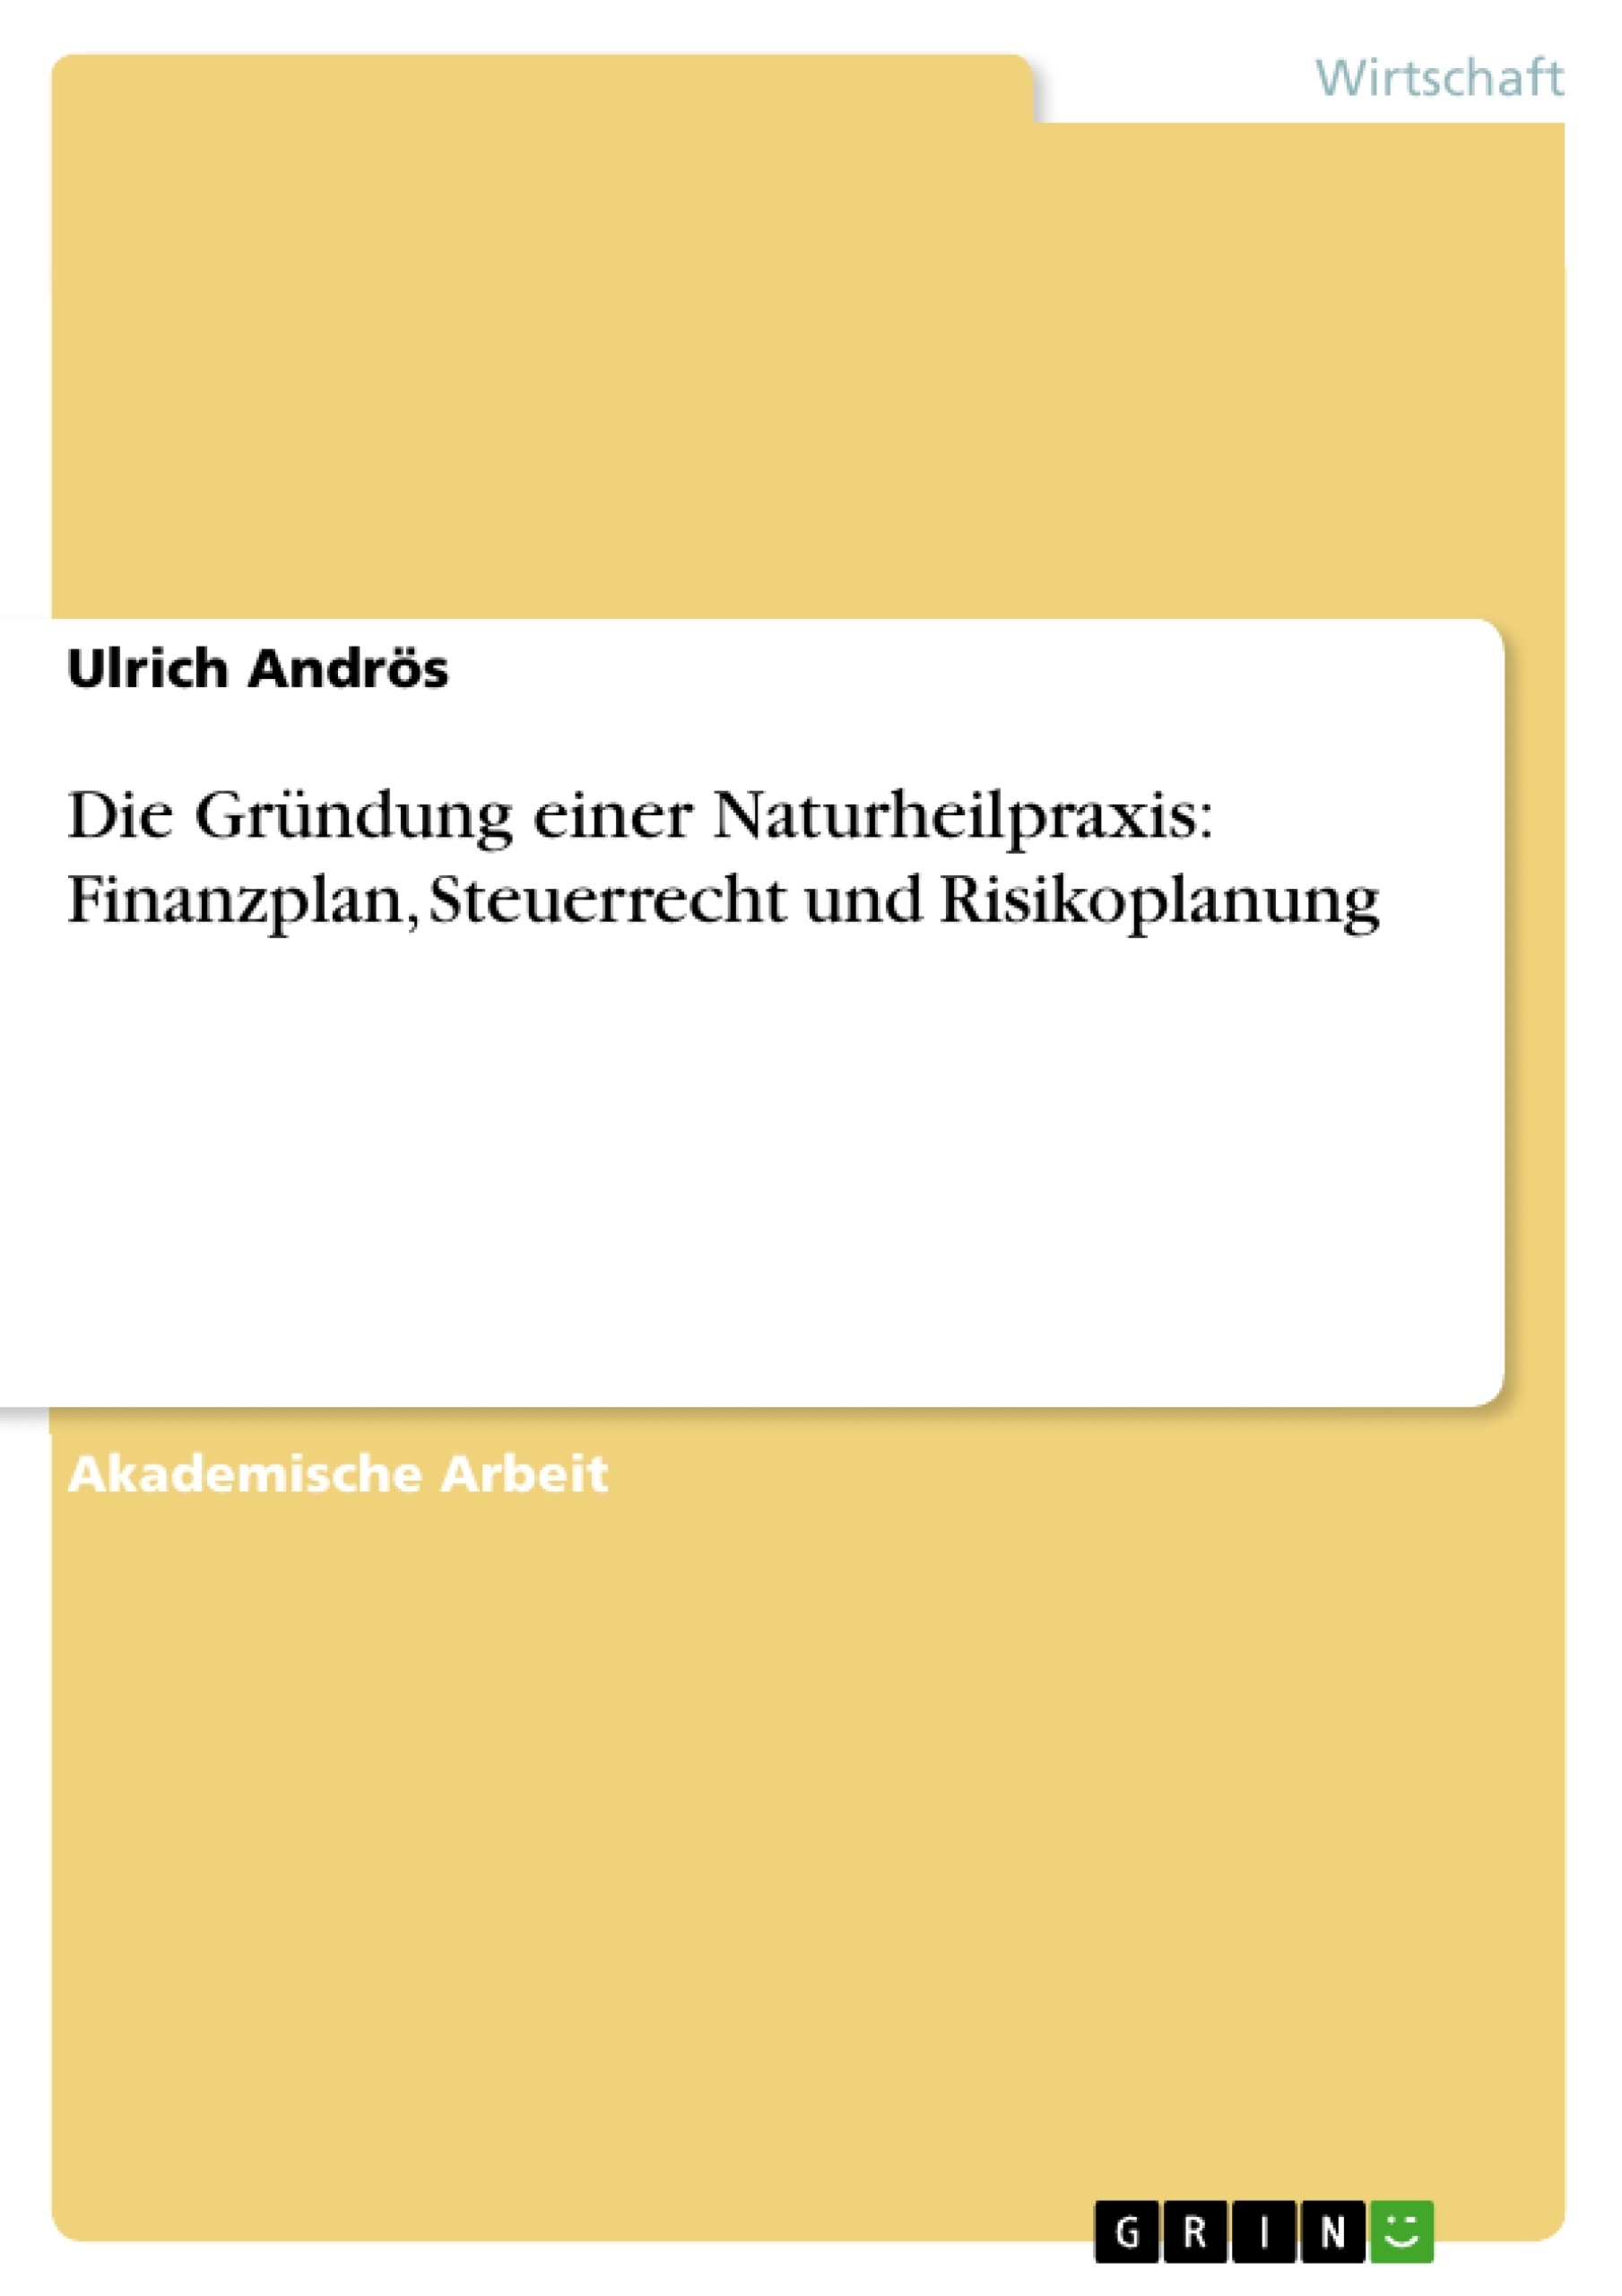 Título: Die Gründung einer Naturheilpraxis: Finanzplan, Steuerrecht und Risikoplanung